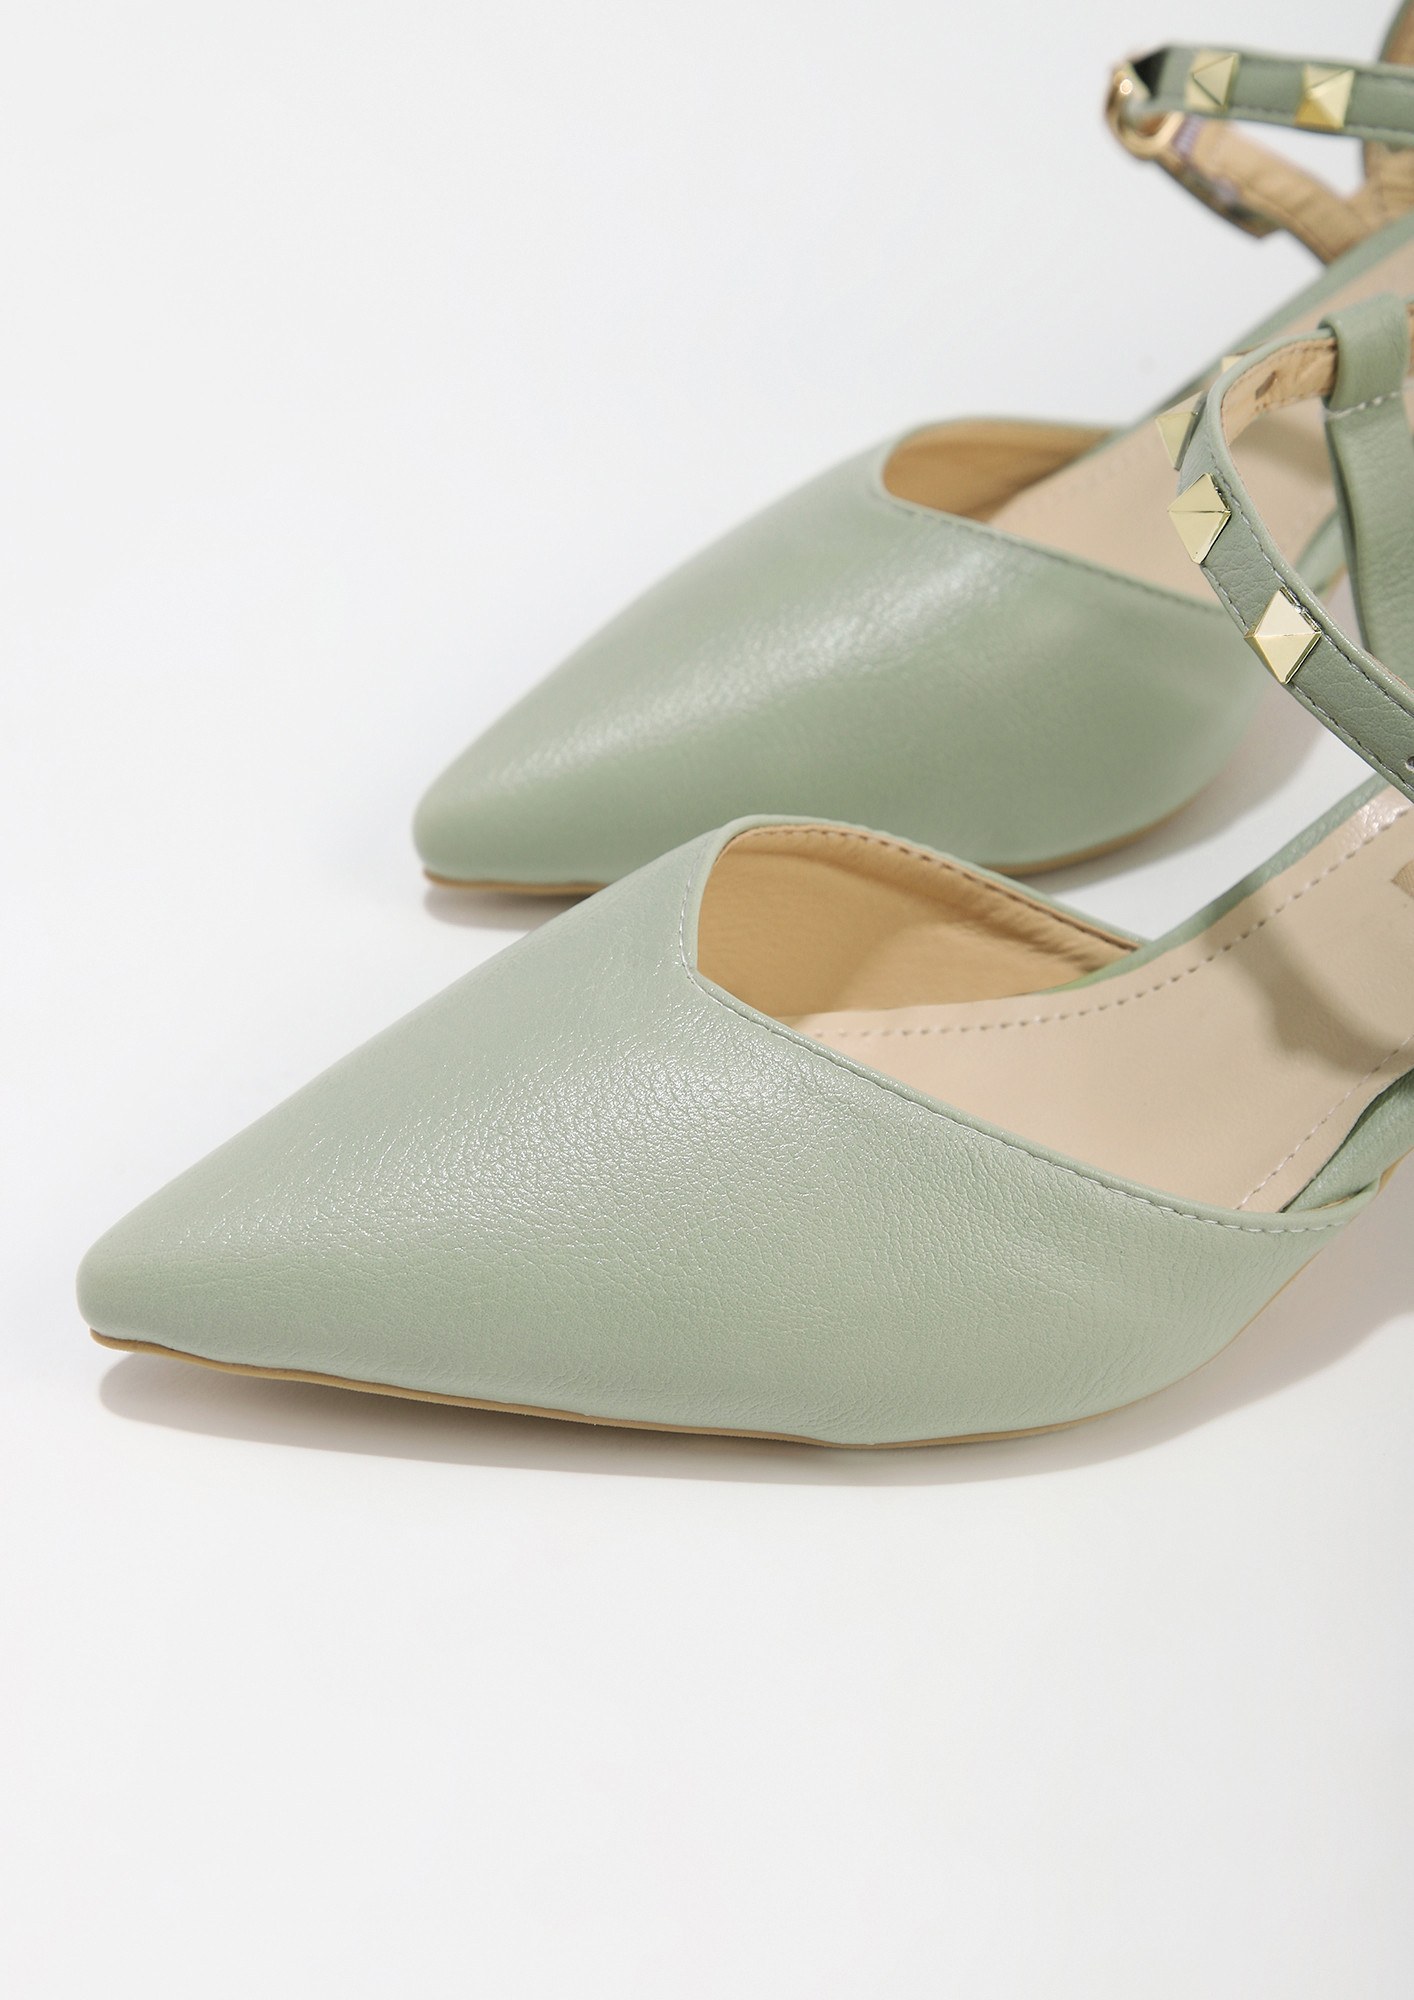 ASOS DESIGN Fluent strappy flat sandal in green | ASOS